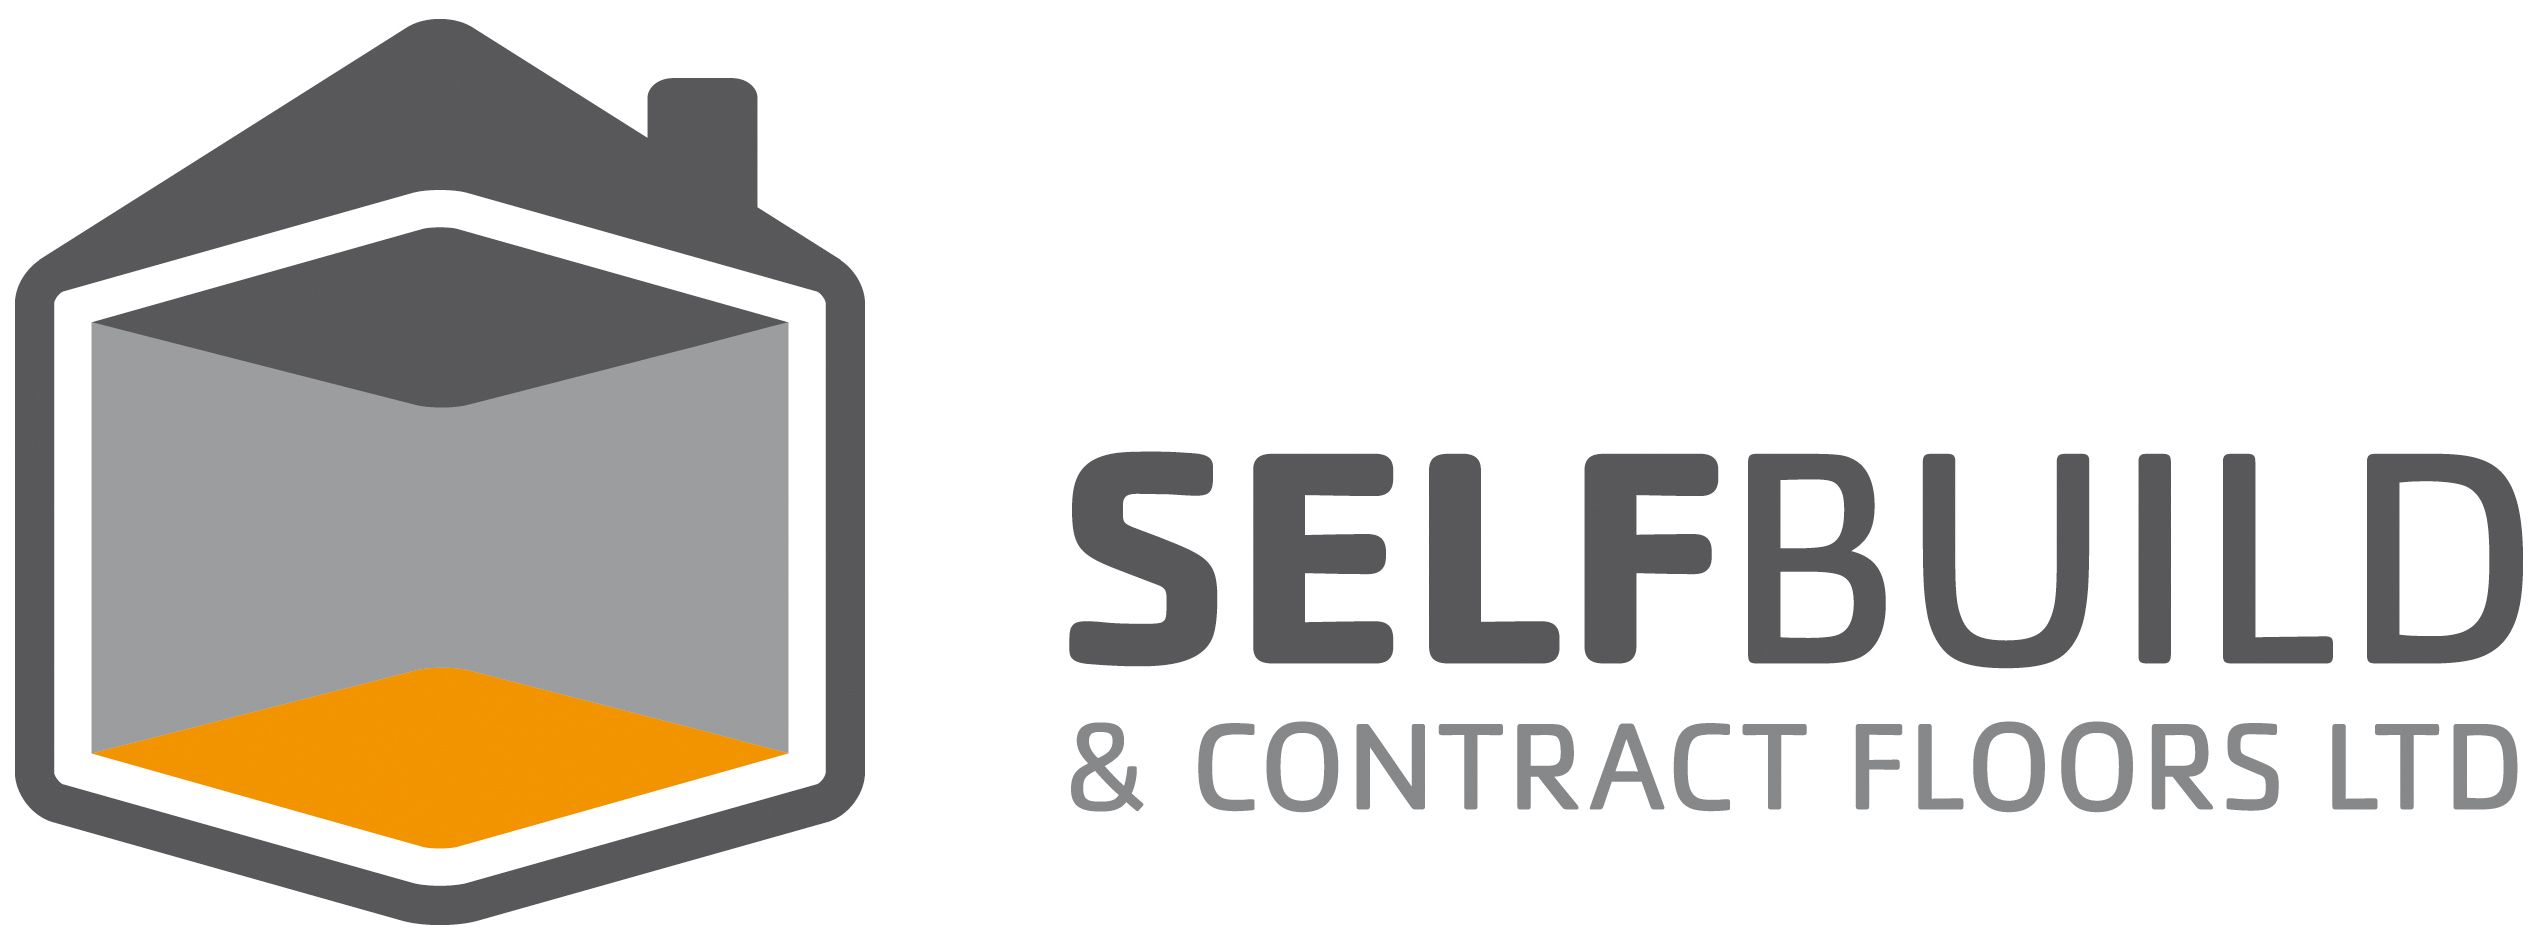 Selfbuild & Contract Floors